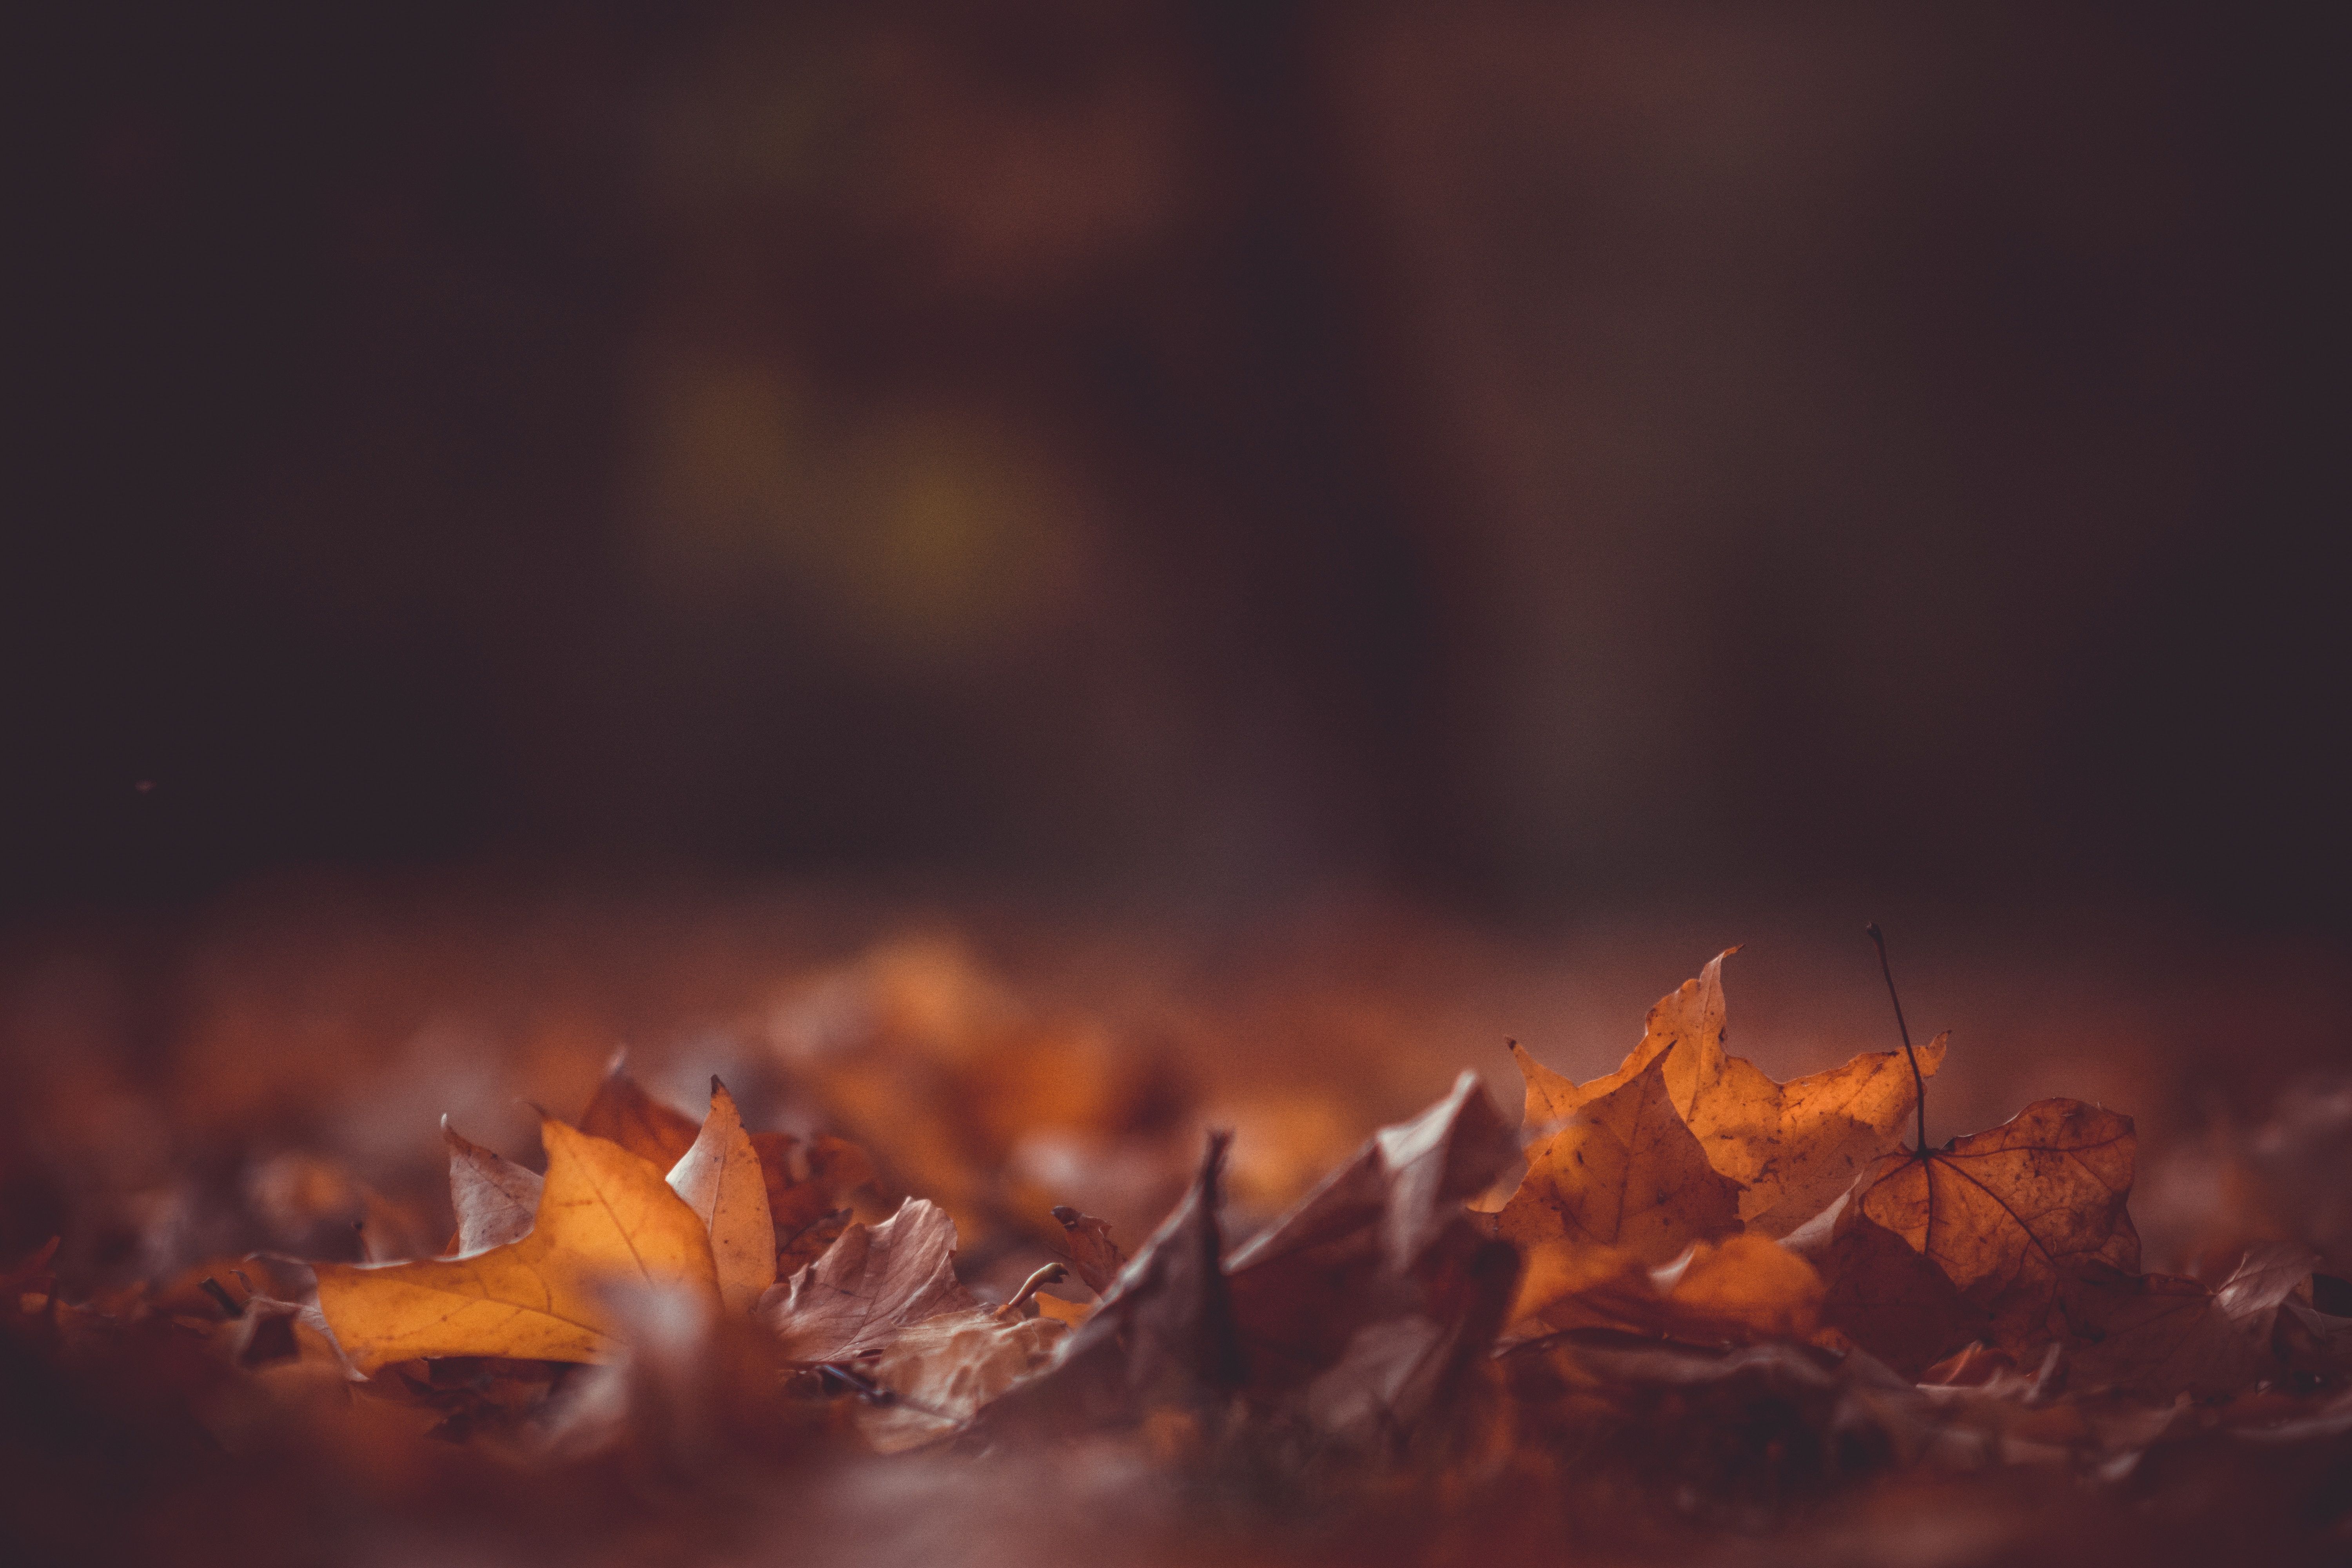 6000x4000 #wallpaper, #ground, #blury, #season, #pile, #bokeh, #Free image, #fall background, #dark, #forest, #leafe, #harvest, #fall, #moody, #blur, #autumn, #fall wallpaper, #red, #black, #orange, #leaf. Mocah HD Wallpaper